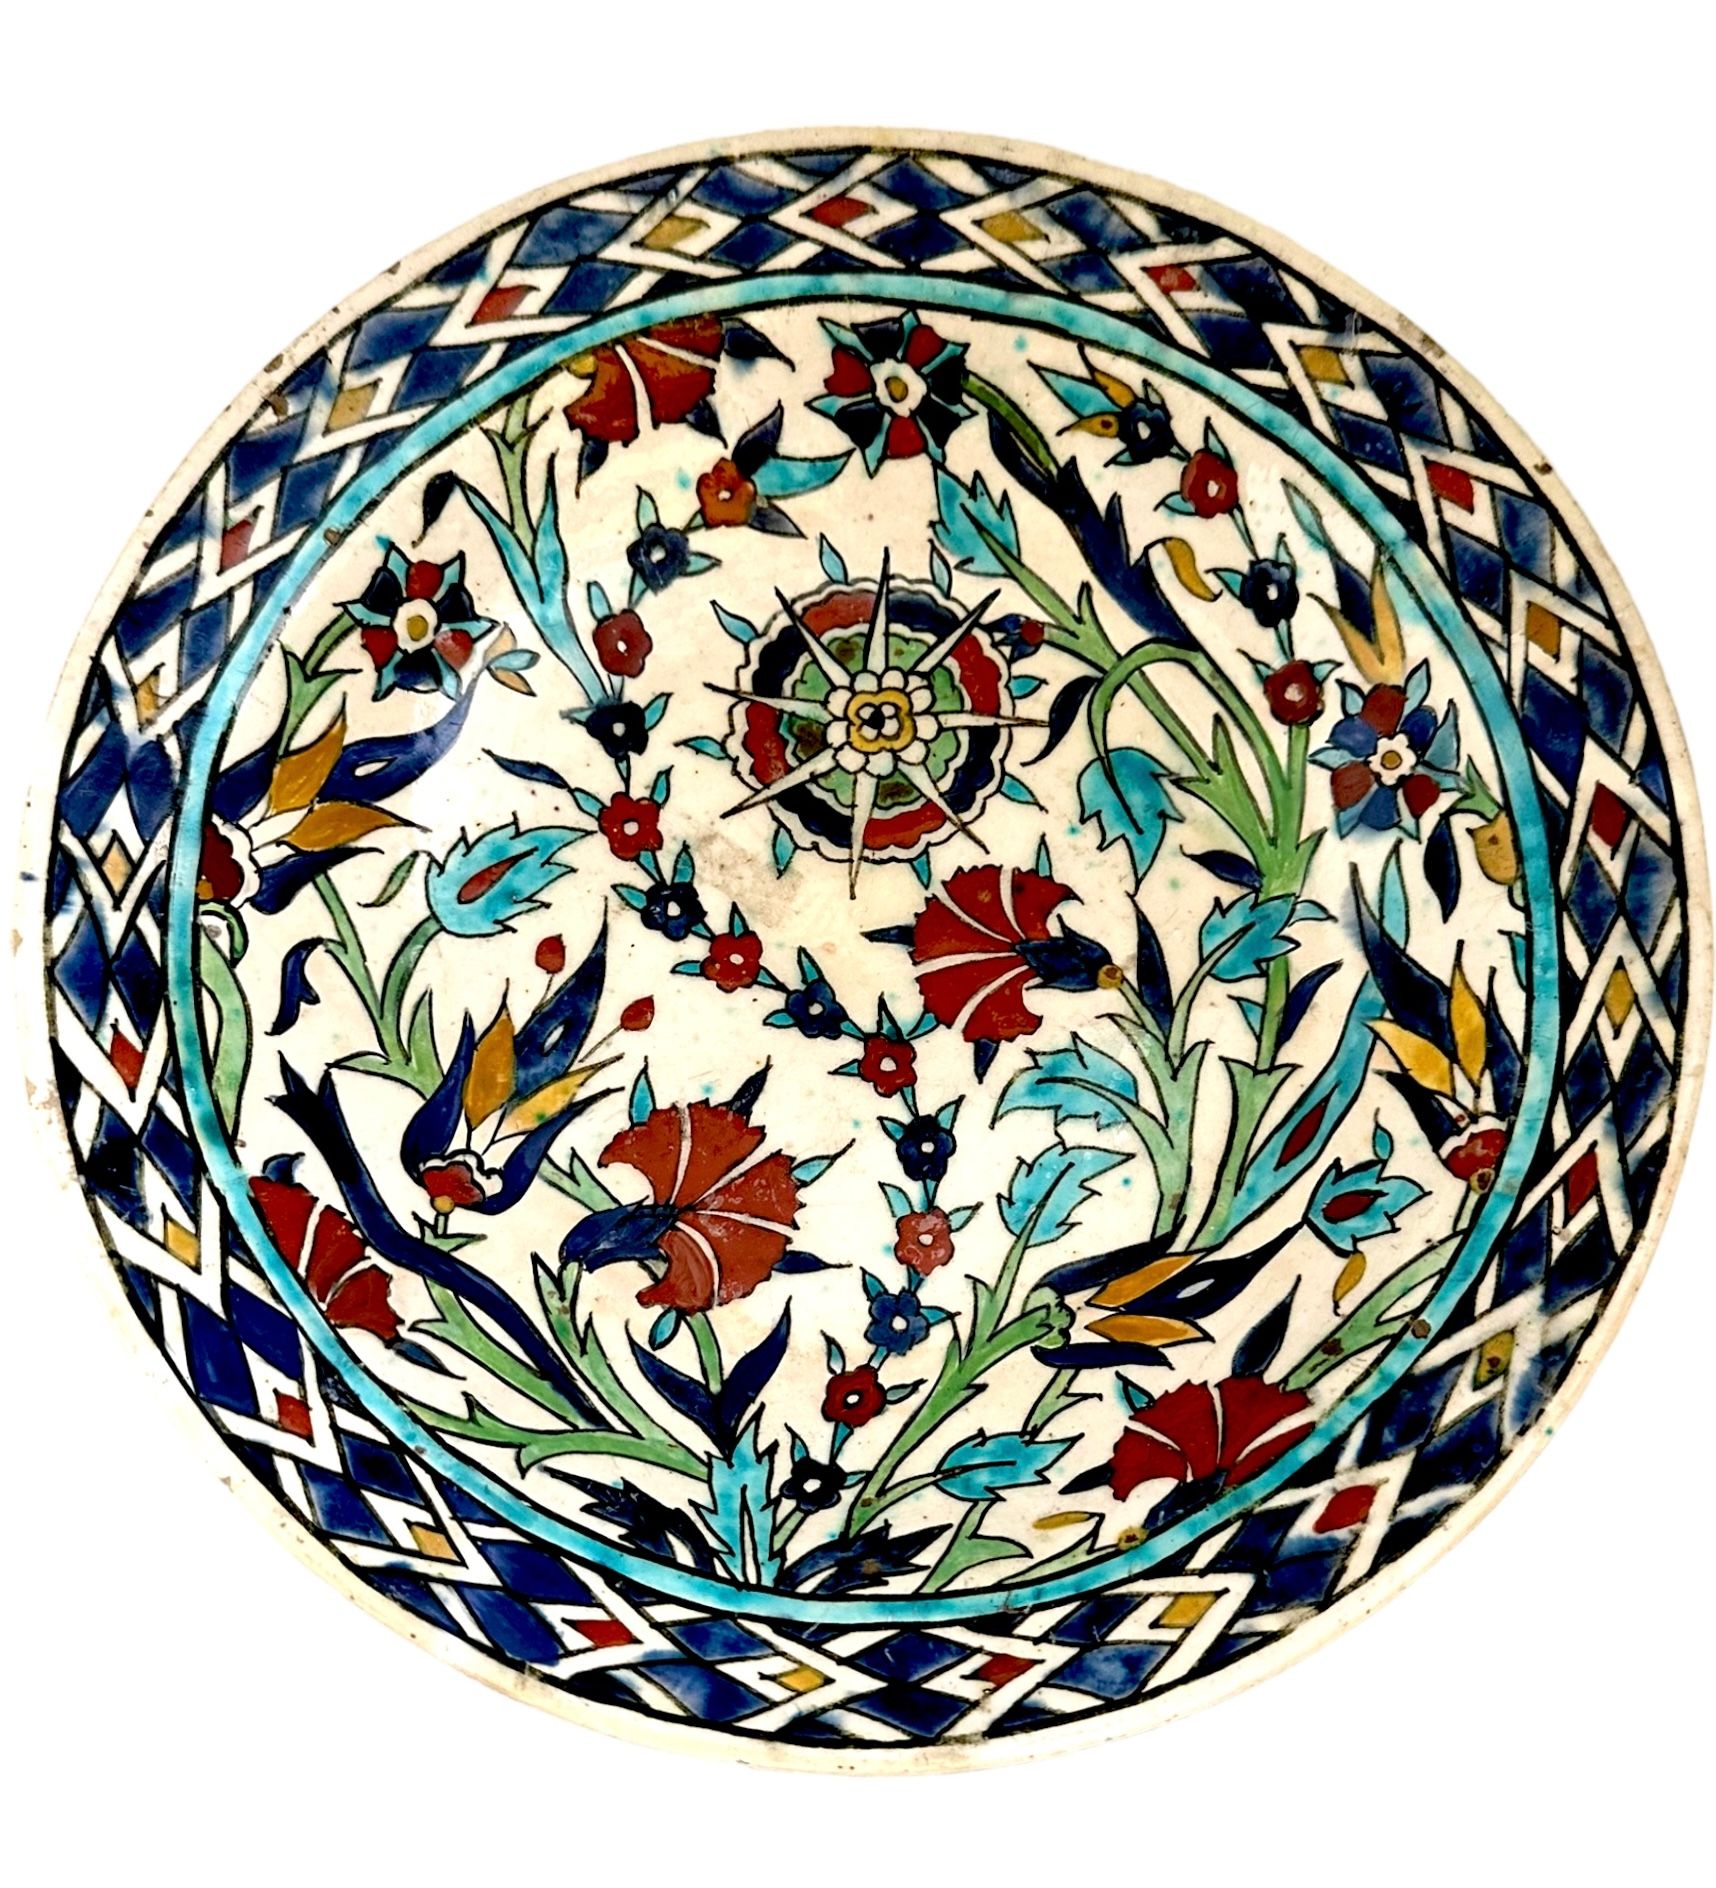 19th century Kütahya Ceramic Plate Assiette en céramique Kütahya du XIXe siècle,&hellip;